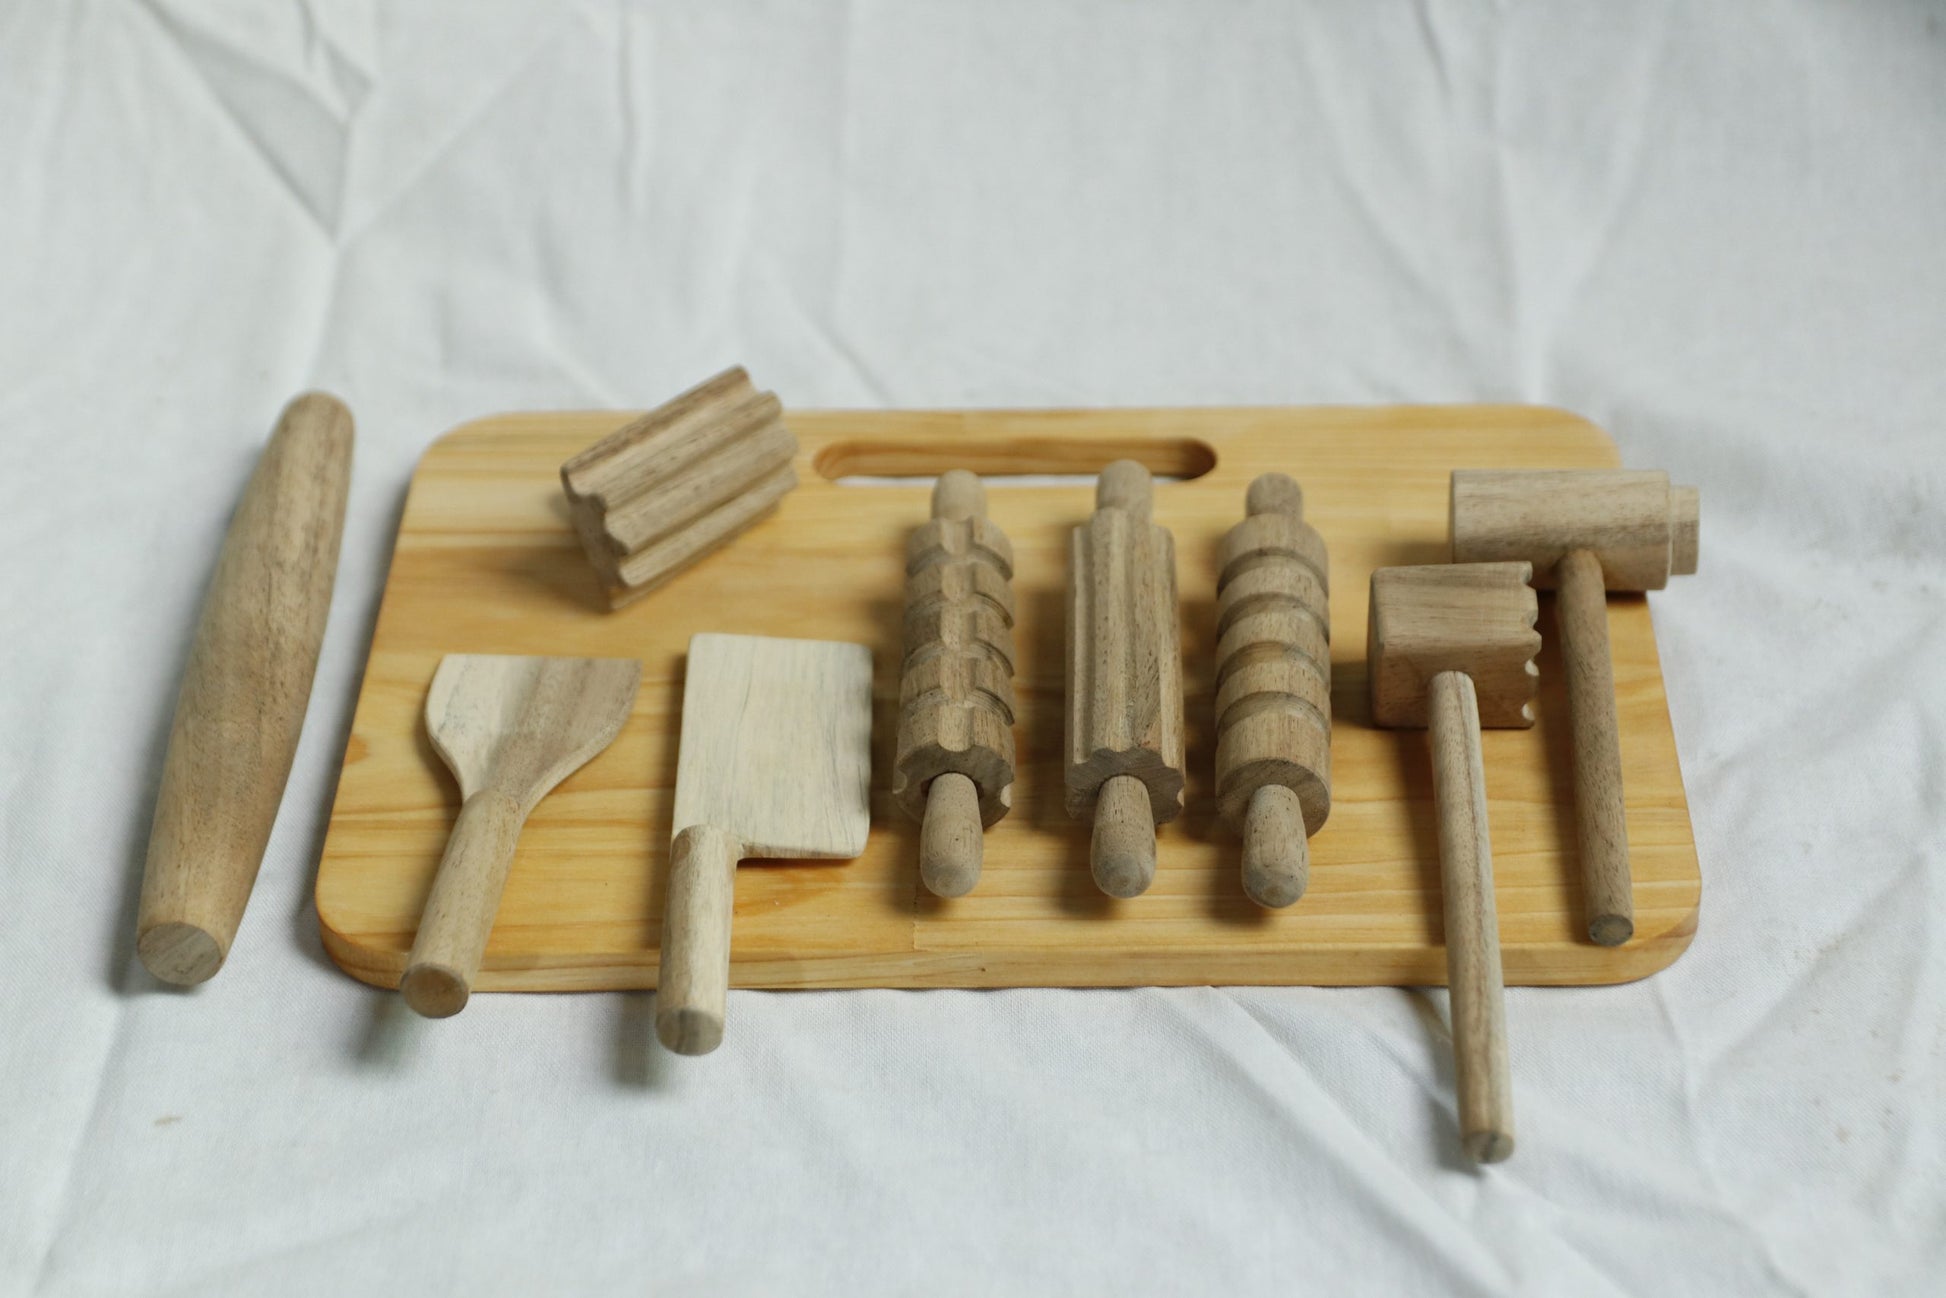 Wooden Play Dough Kit